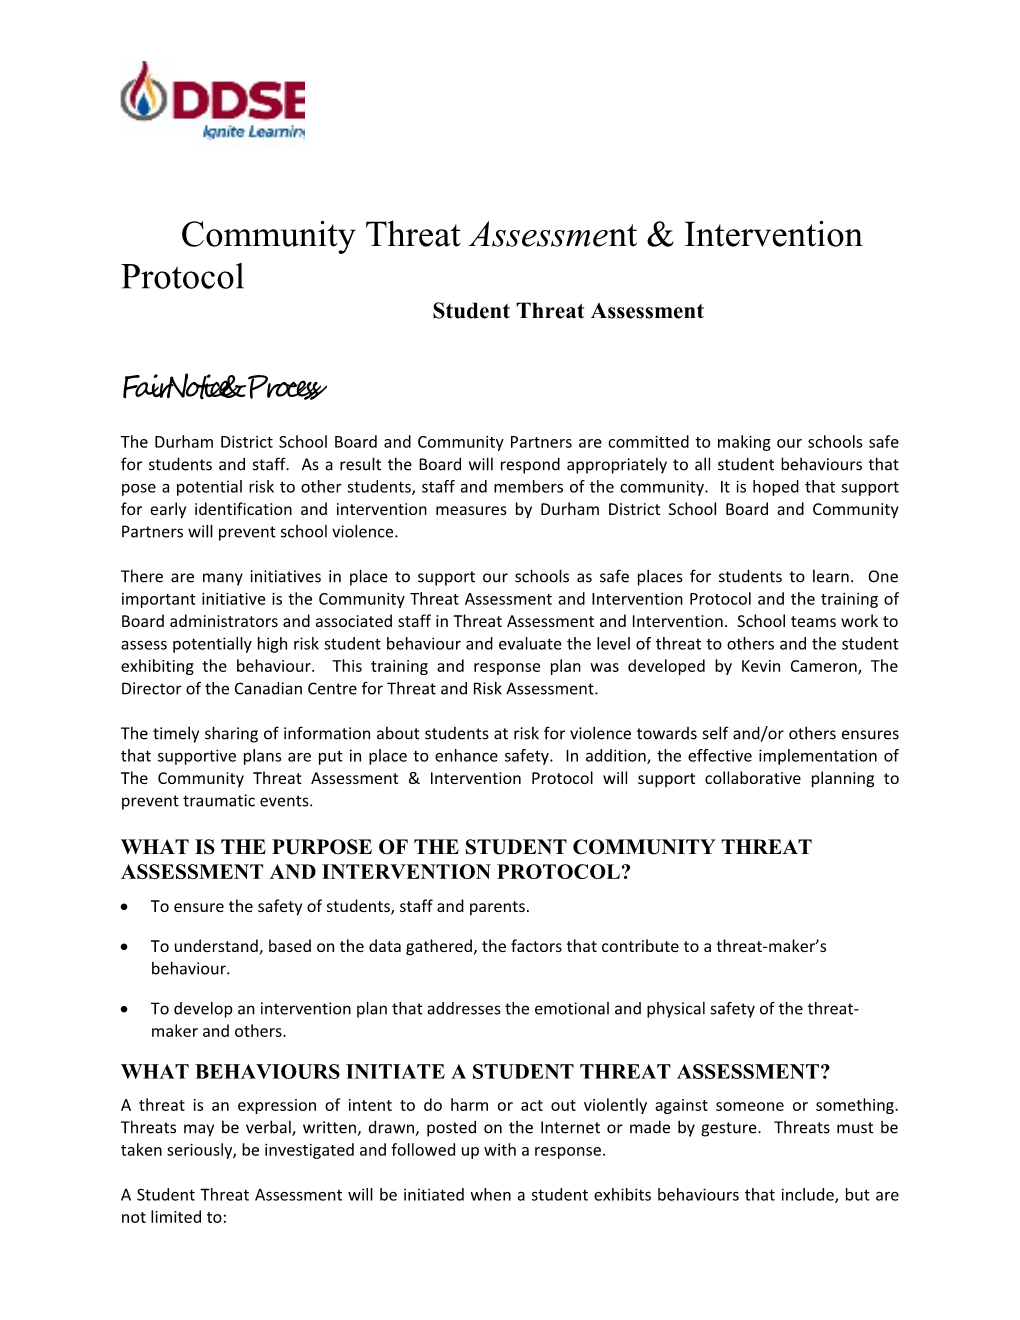 Community Threatassessment &Intervention Protocol